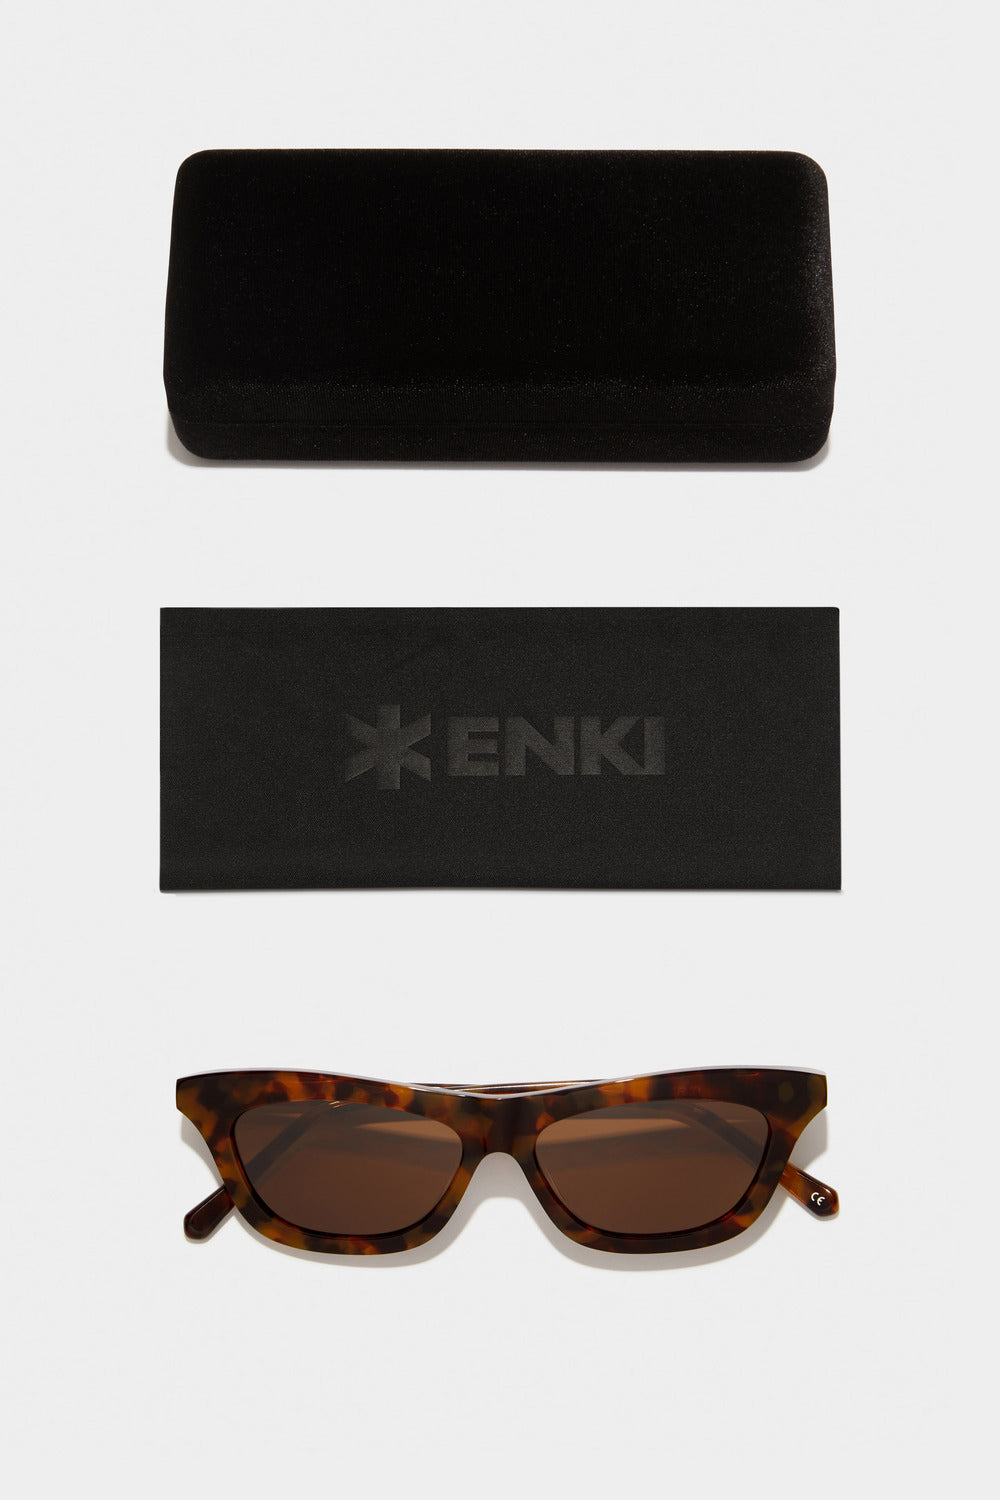 www.enkieyewear.com Brizo Men’s and Women’s Sunglasses